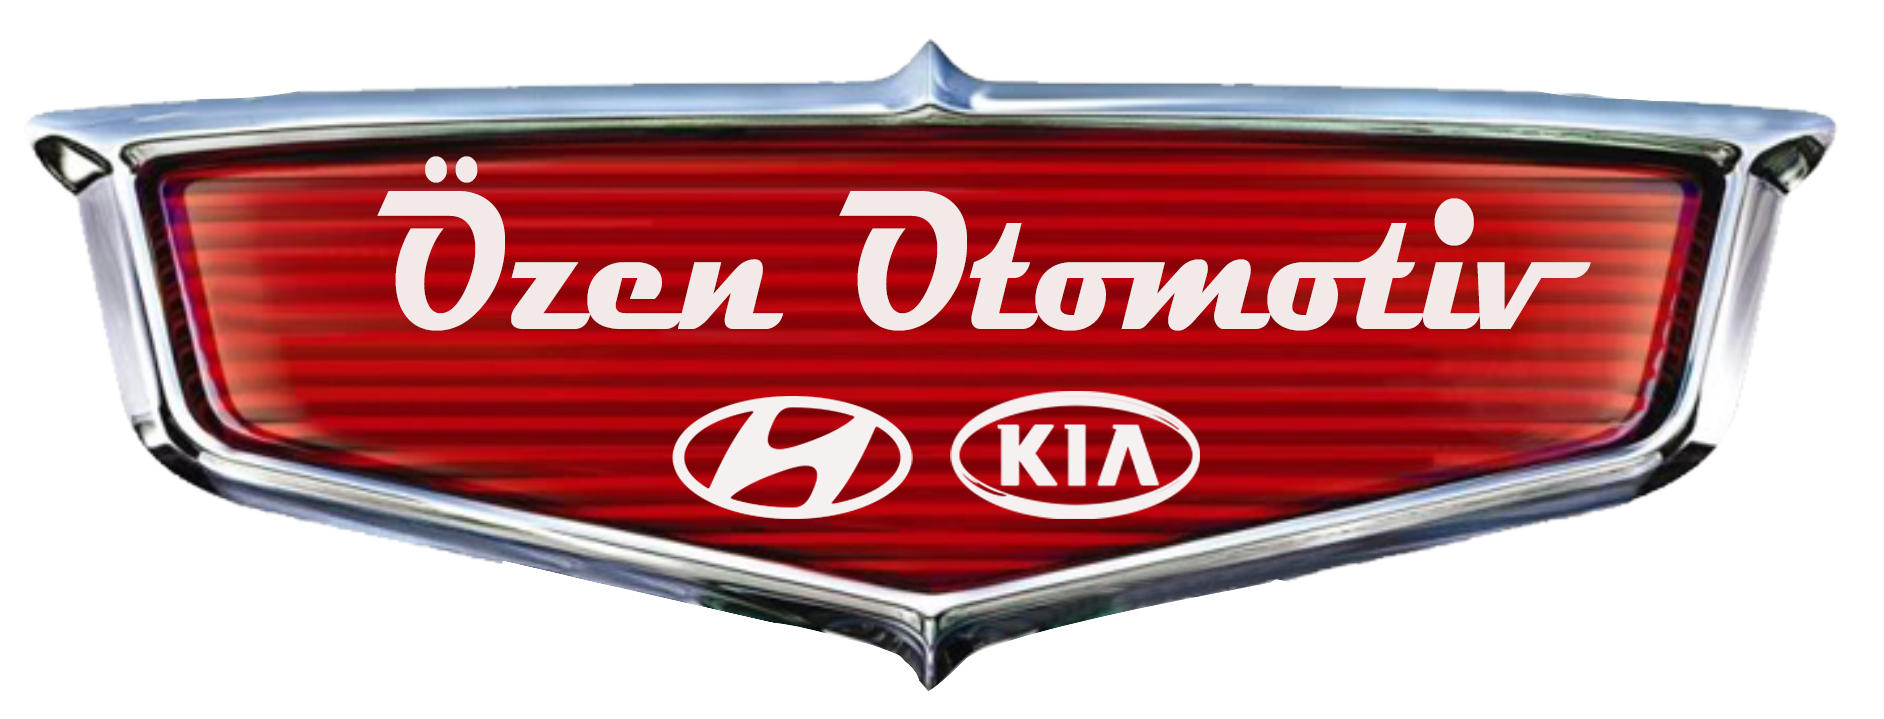 Özen Otomotiv Hyundai Kia Özel Servis Kartal Oto Sanayi Sitesi